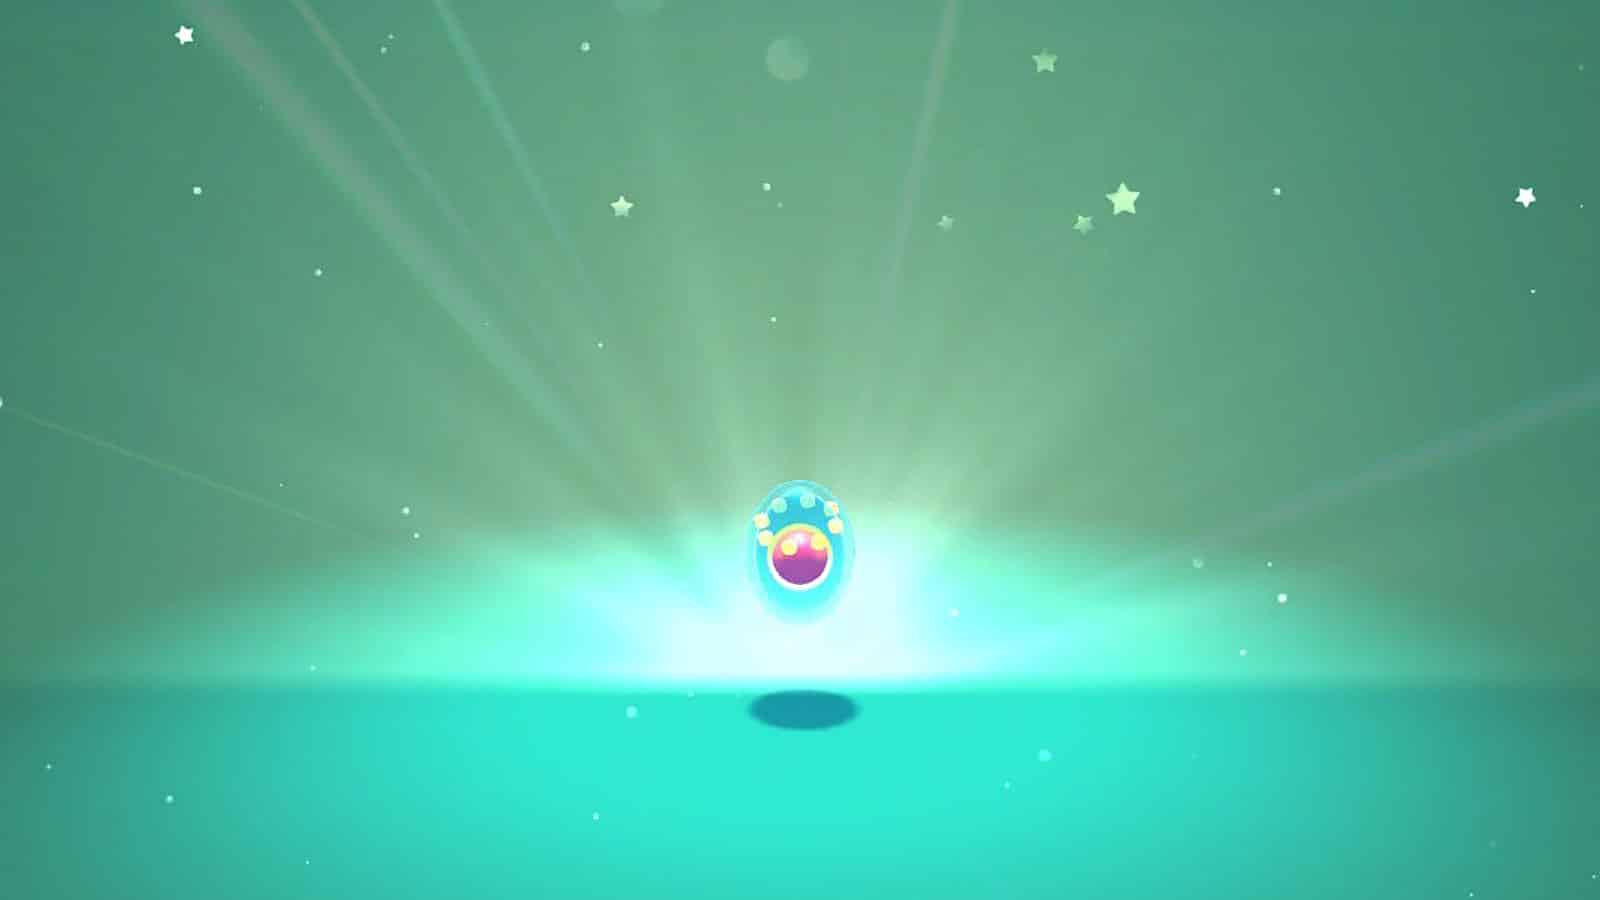 Pokémon Brilliant Diamond / Shining Pearl (Switch): Software updates  (latest: Ver. 1.3.0) - Perfectly Nintendo